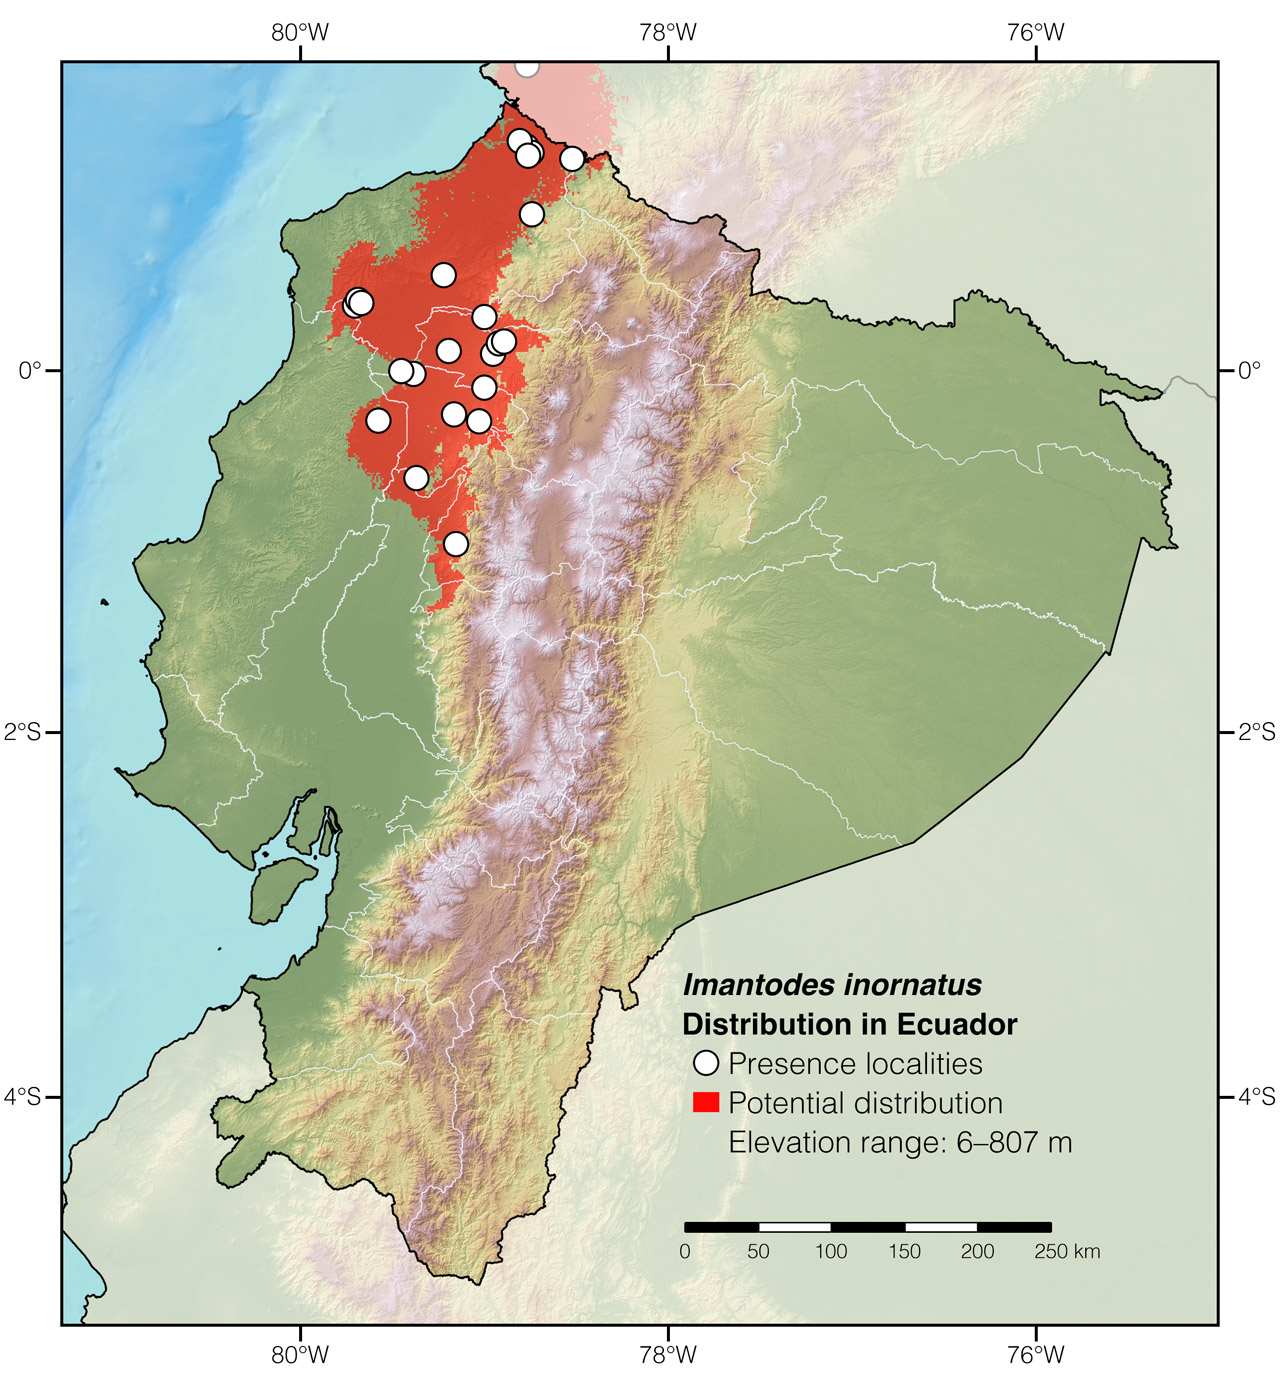 Distribution of Imantodes inornatus in Ecuador